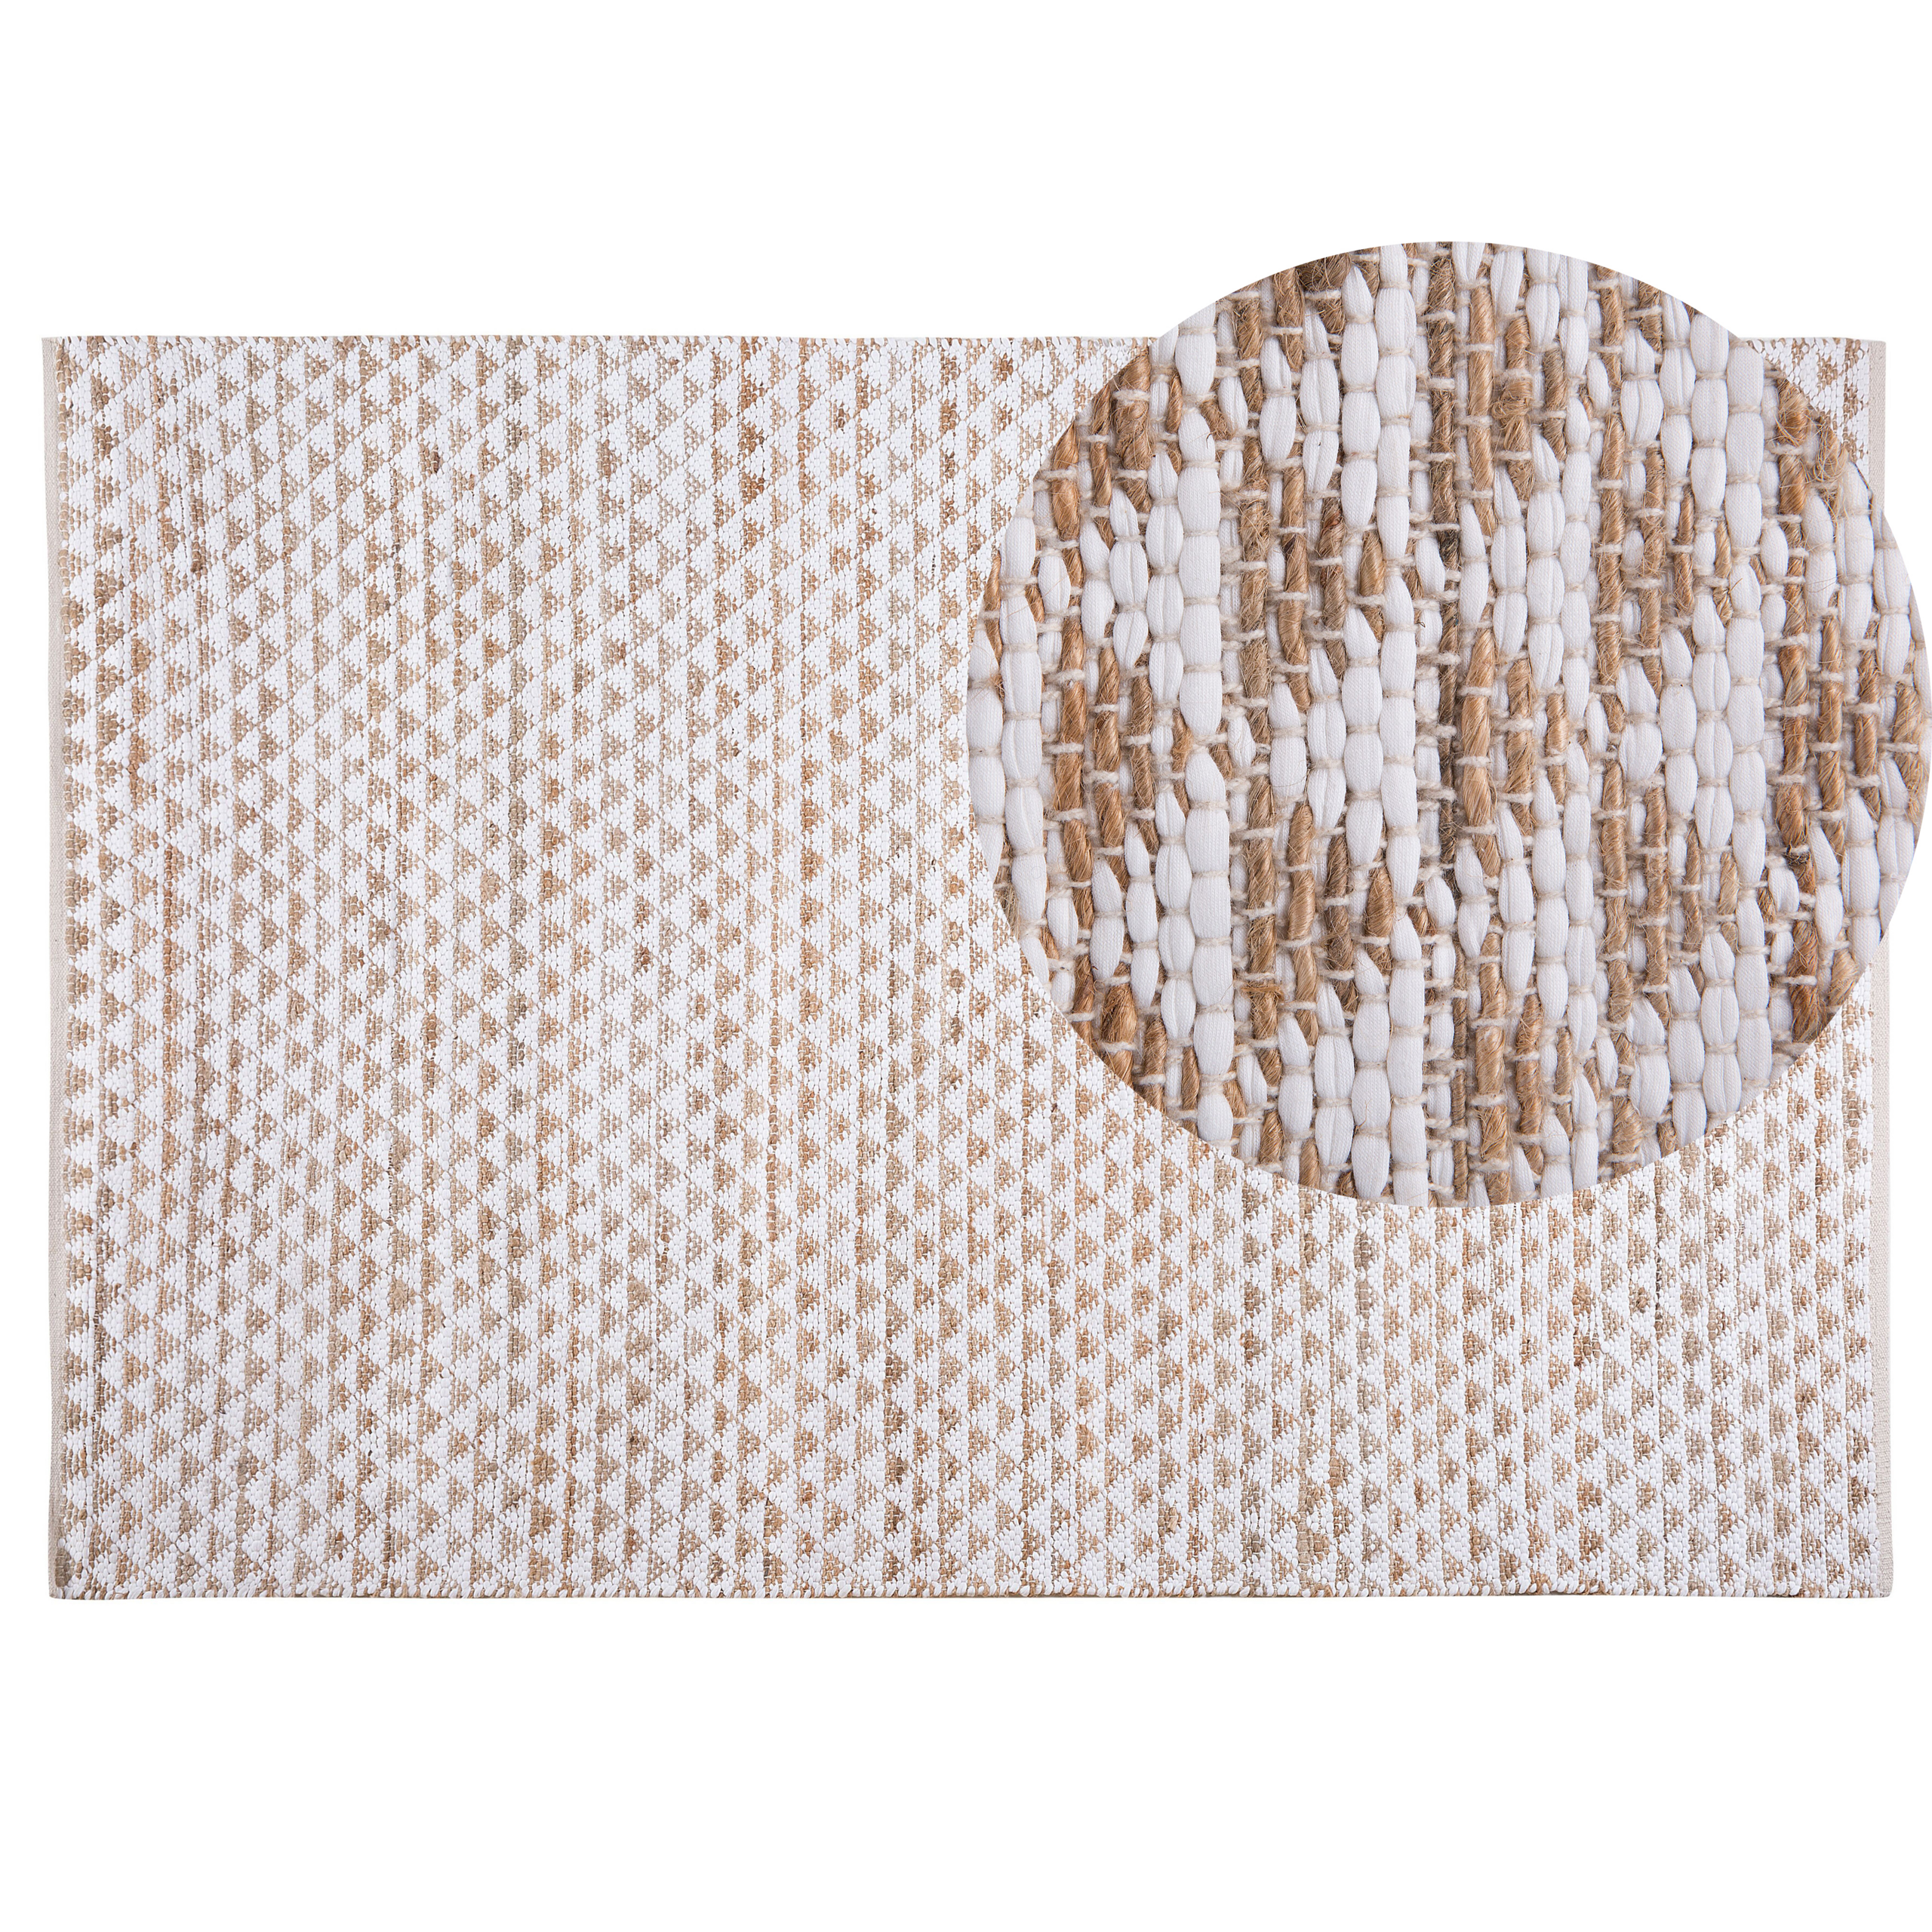 Beliani Rug Beige Jute and Cotton Blend 140 x 200 cm Hand Woven Geometric Pattern